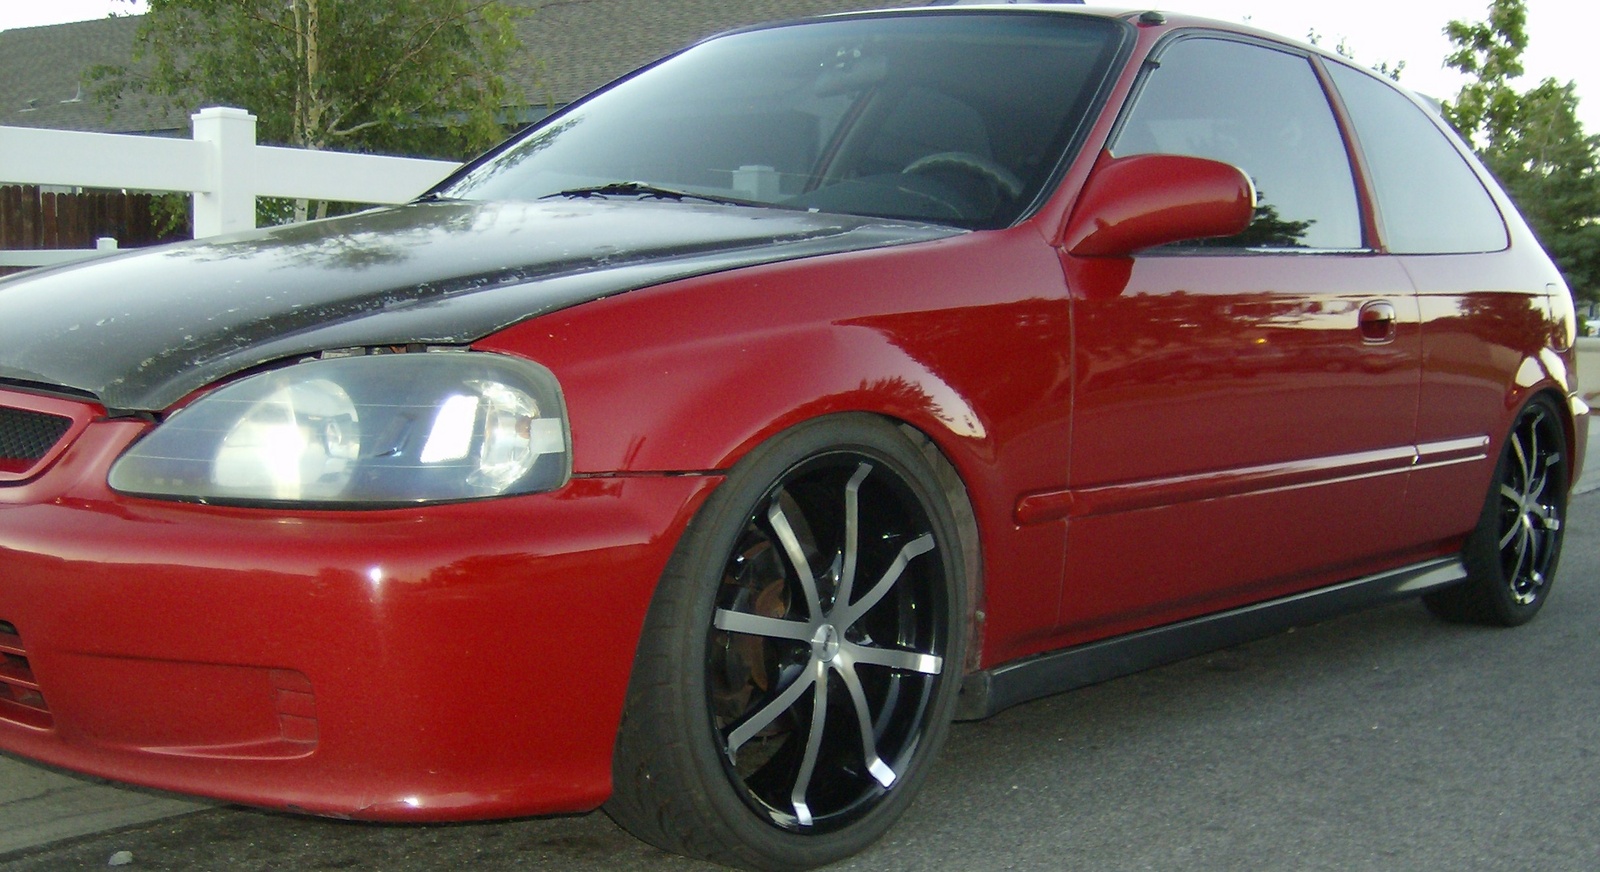 2000 Honda civic cx hatchback reviews #2